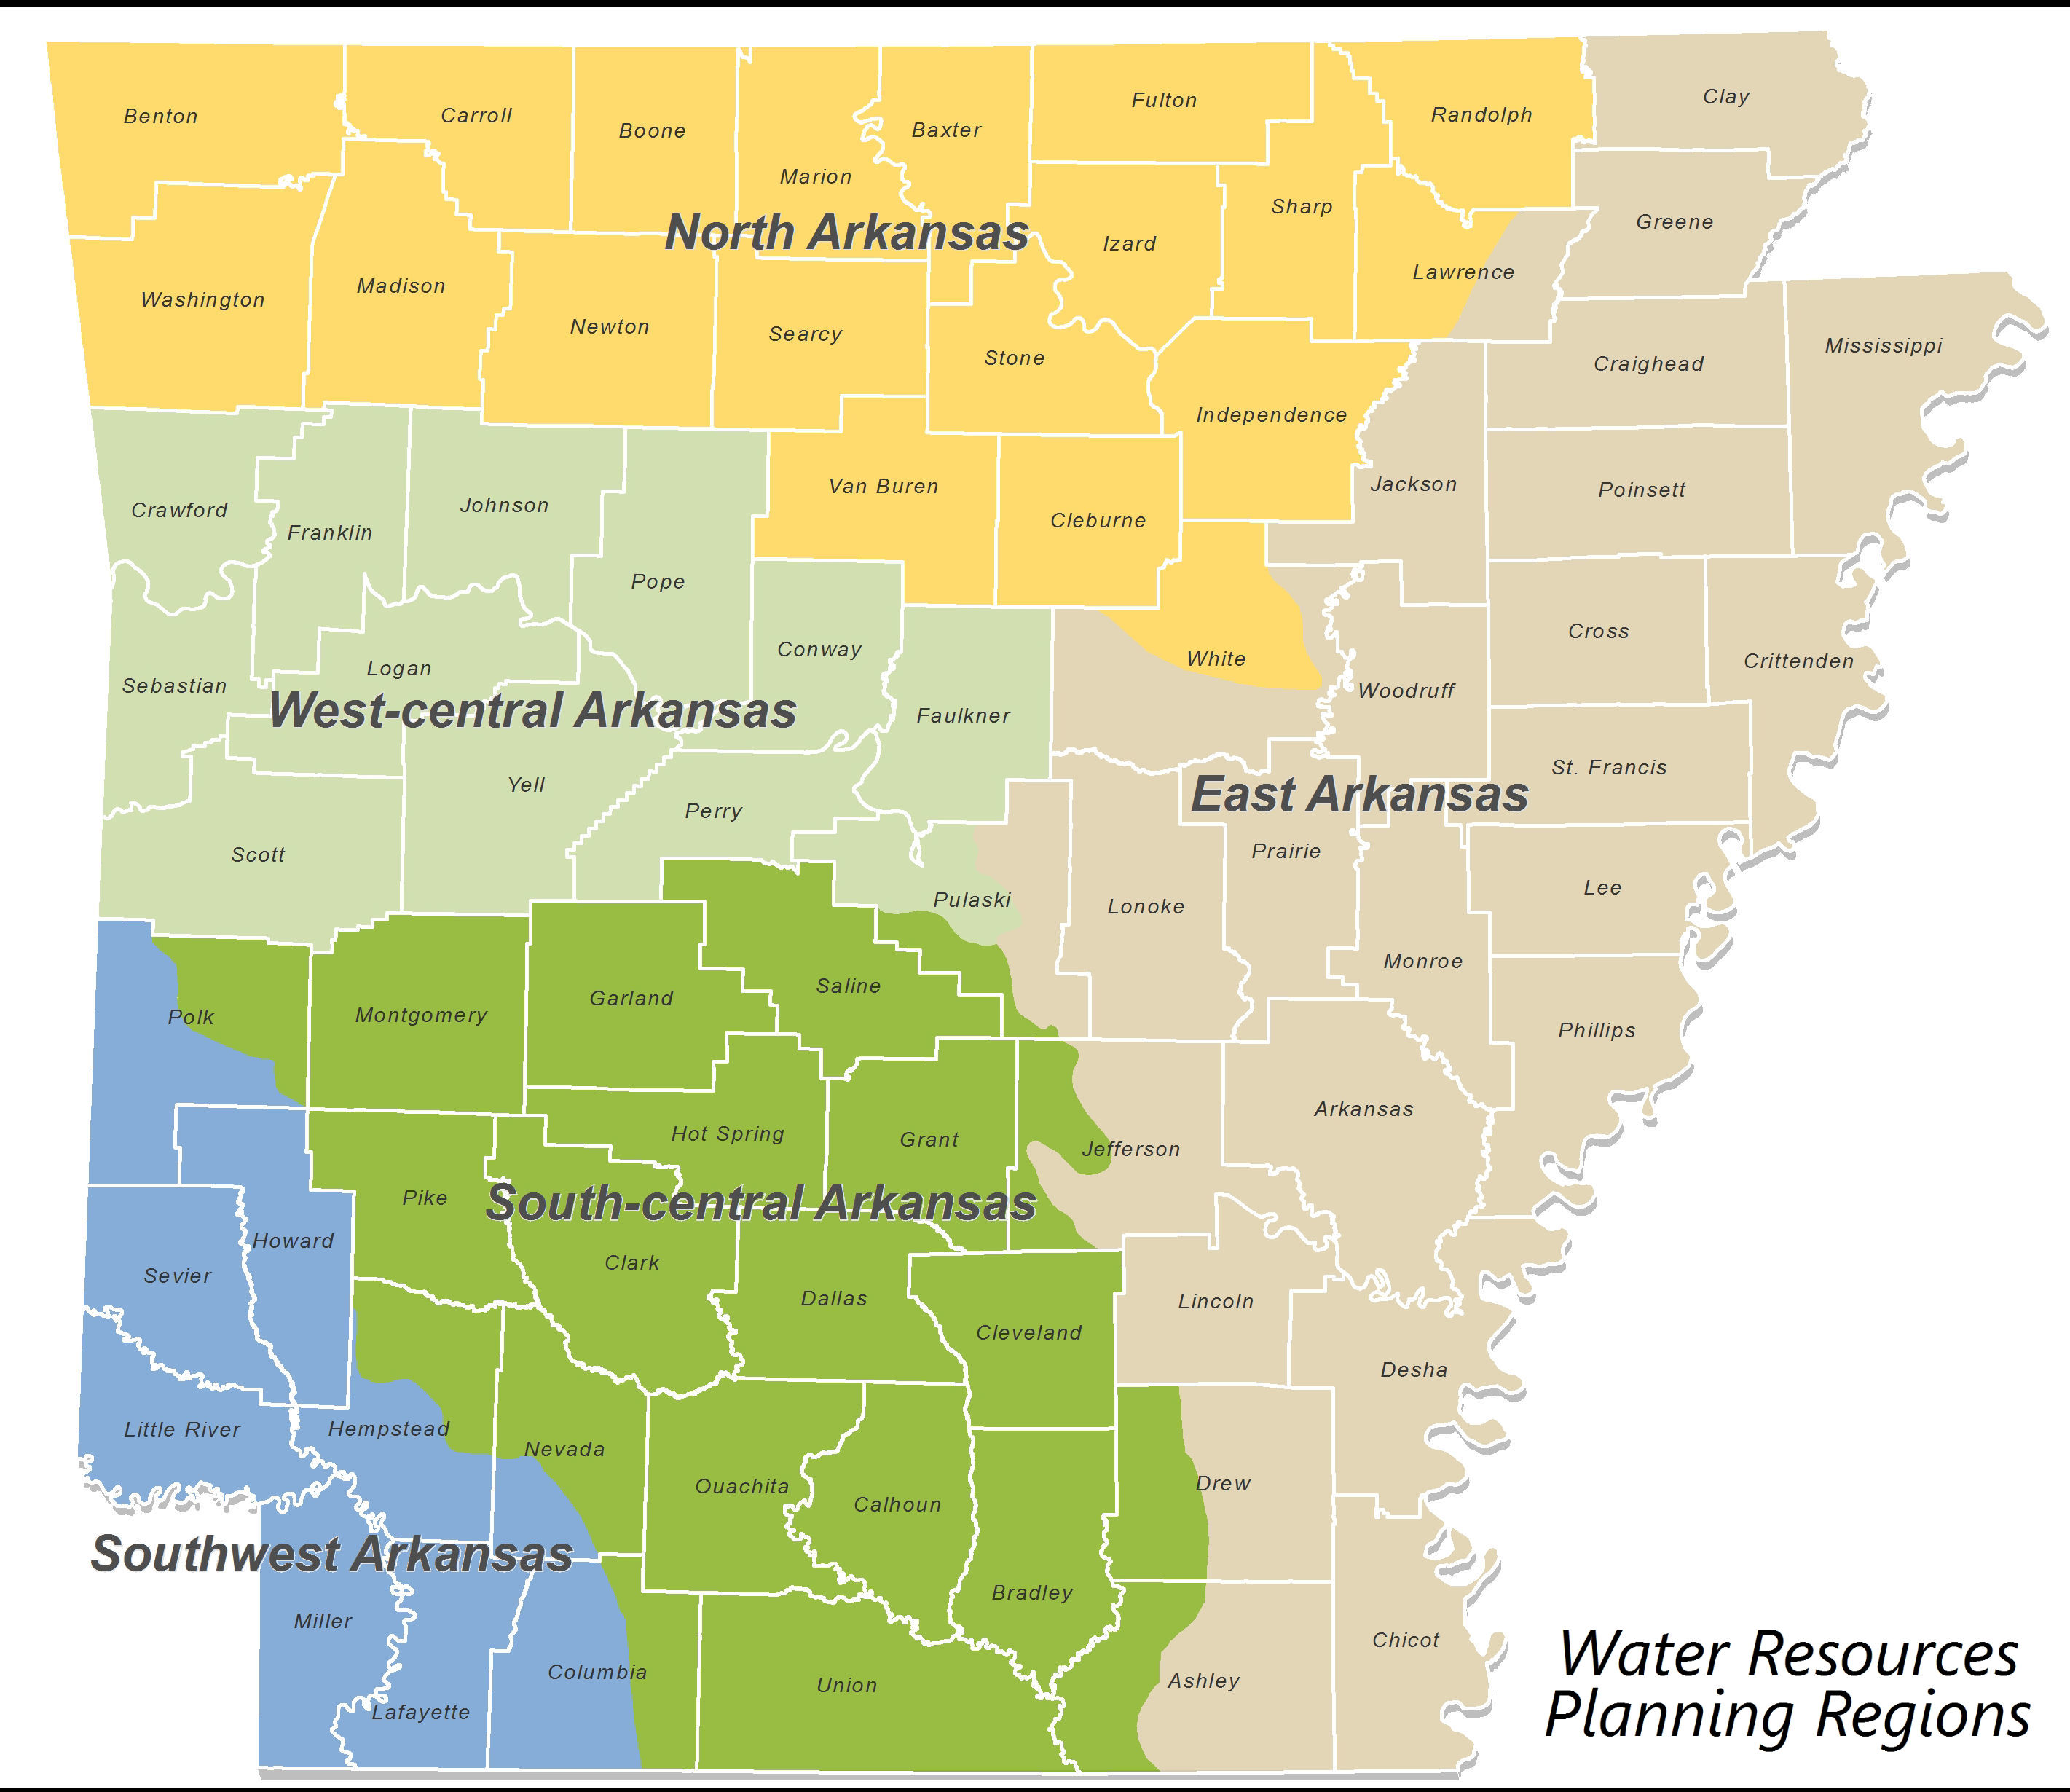 Water Resources Planning Regions